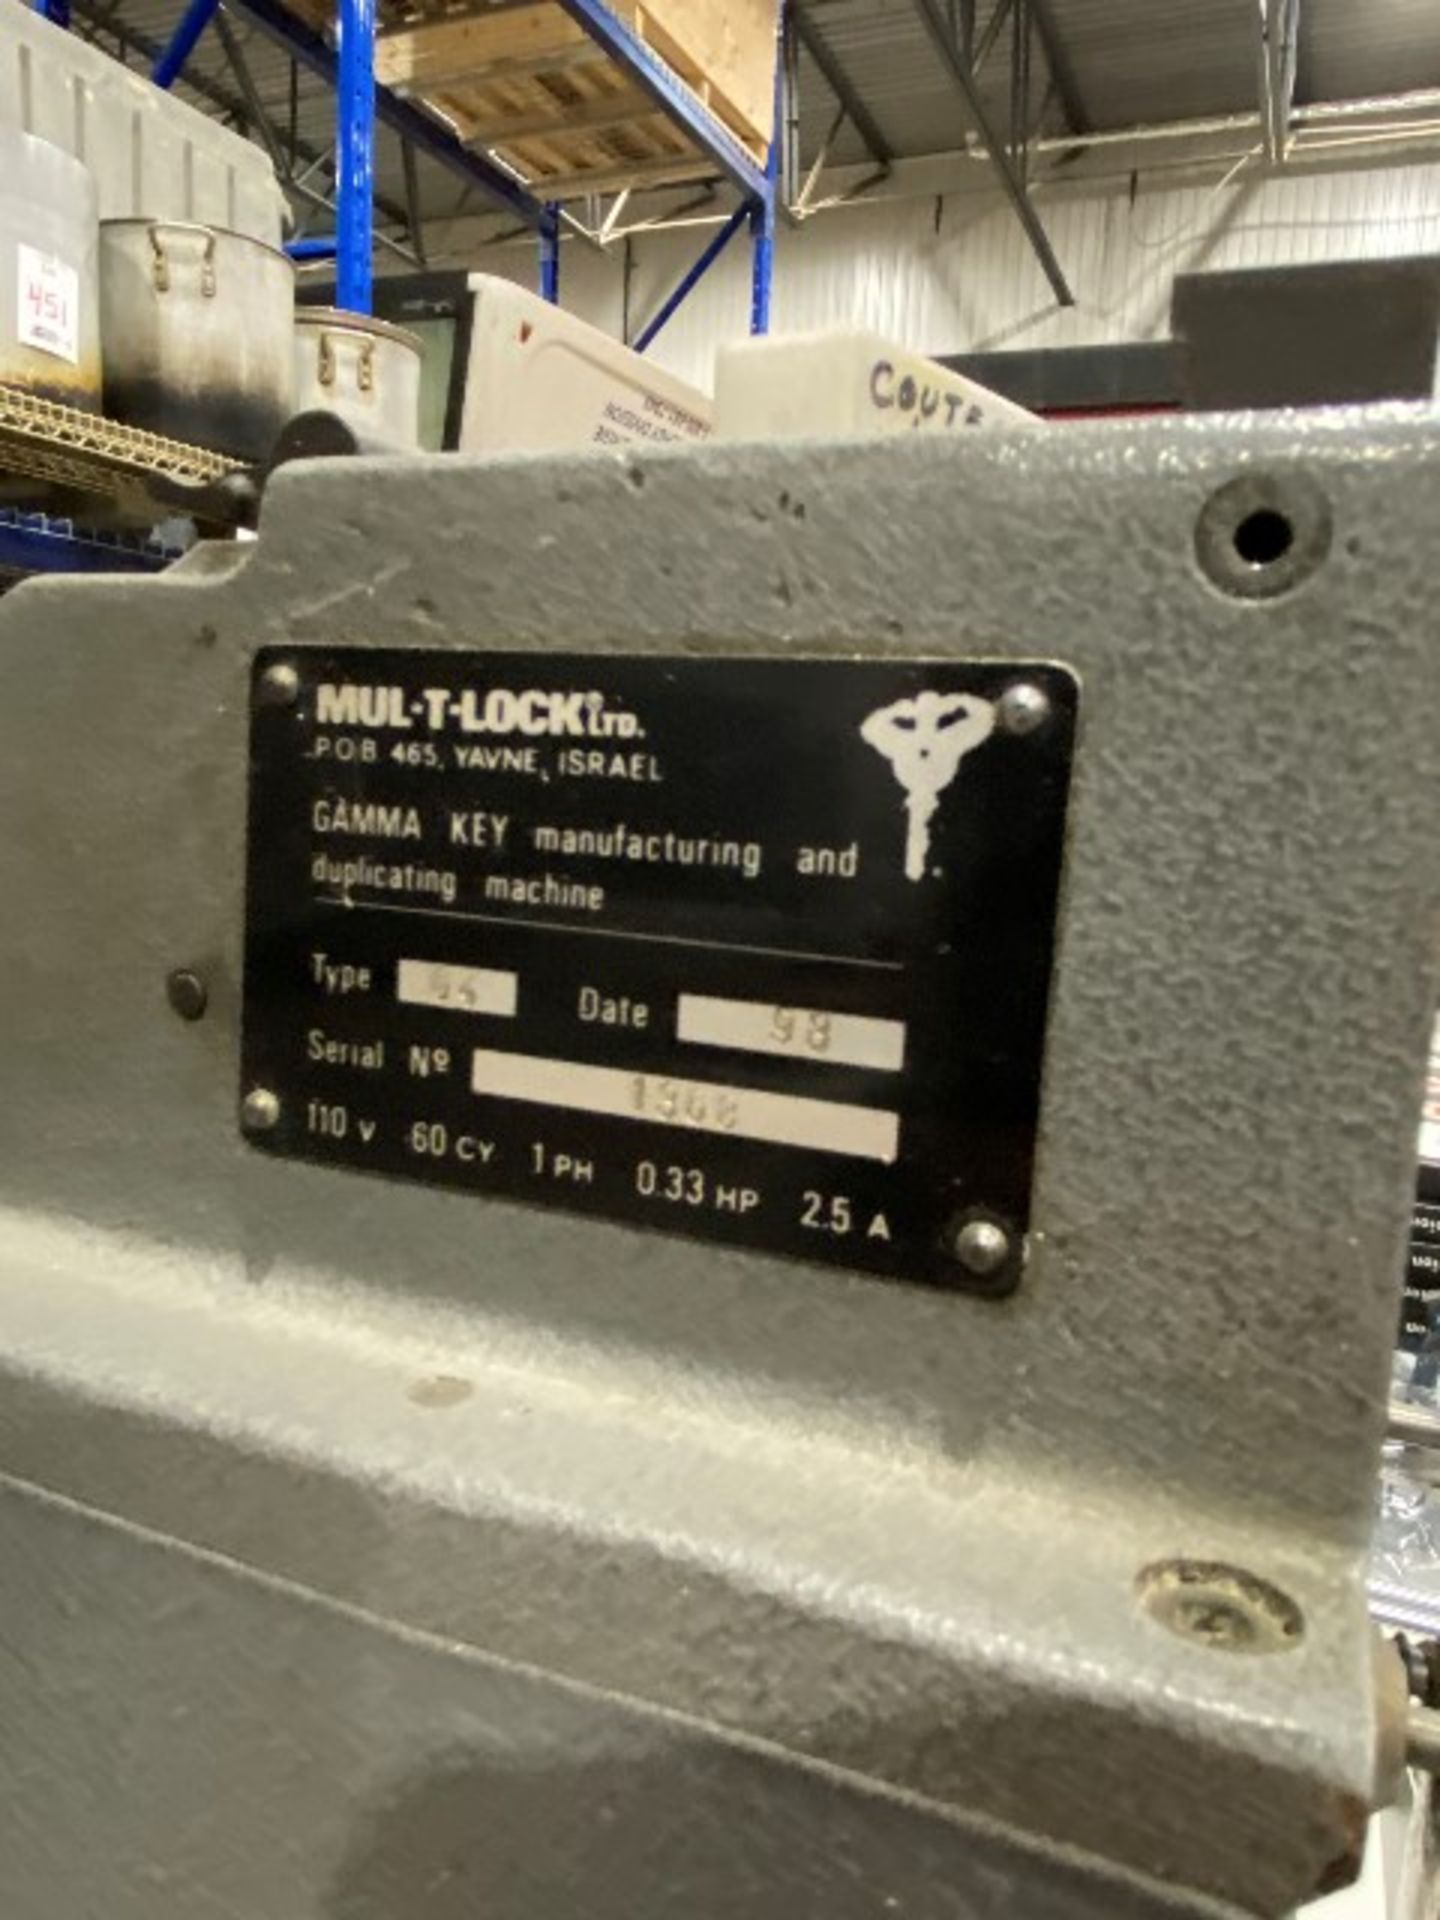 Mul-T-Lock Gamma key manufacturing and duplicating machine - Image 4 of 4